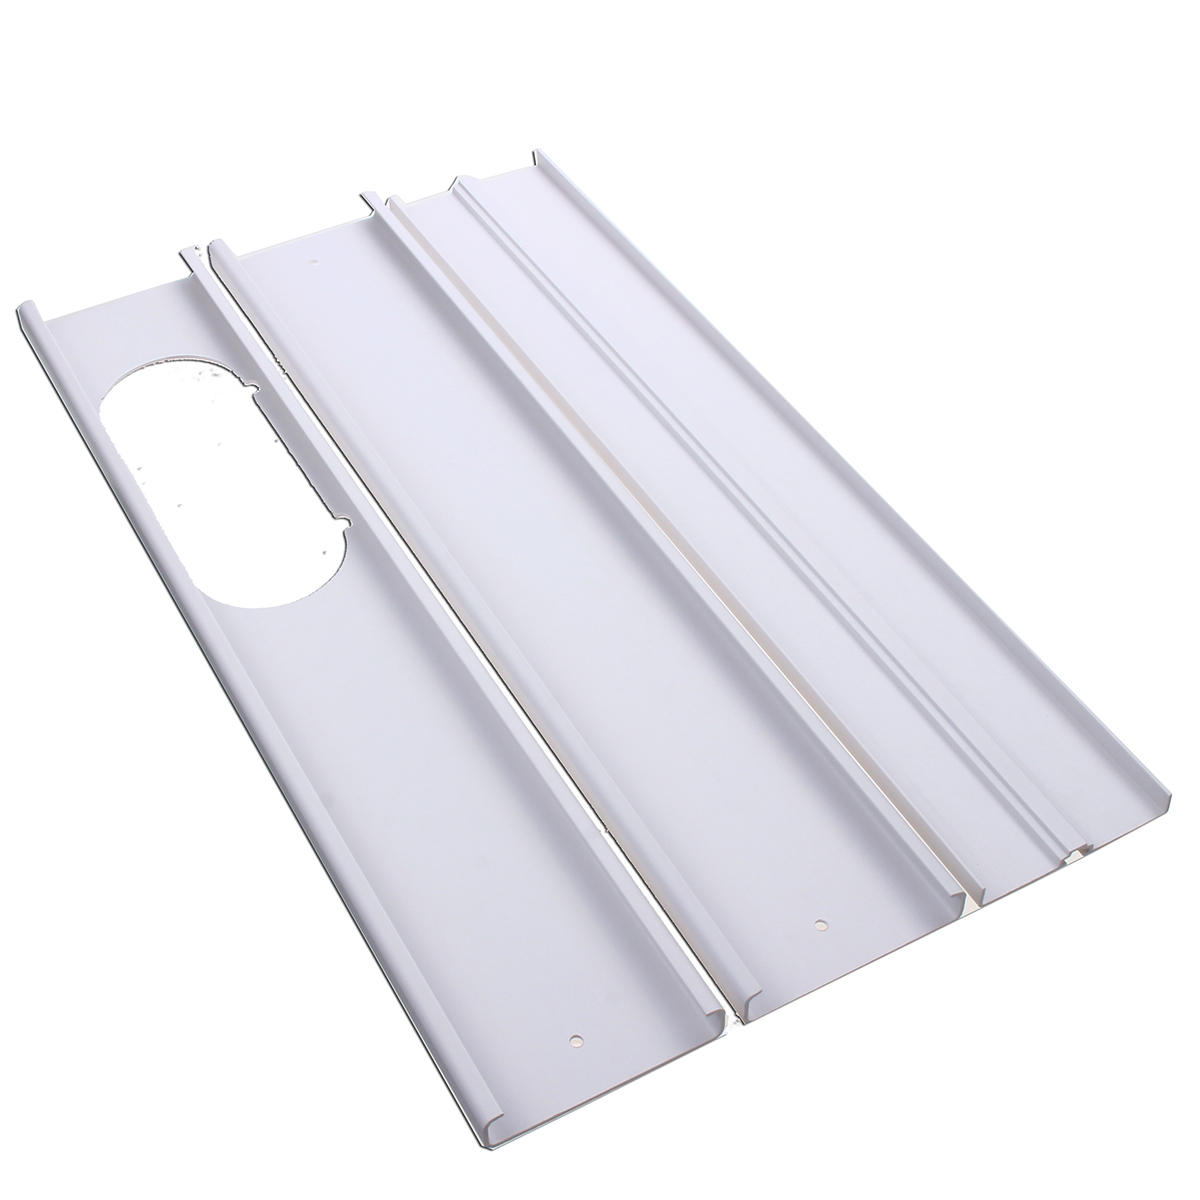 3 Stks 67.5-190 cm Lengte Airconditioner Wind Sheild Window Slide Kit Plaat Voor Draagbare Aircondit